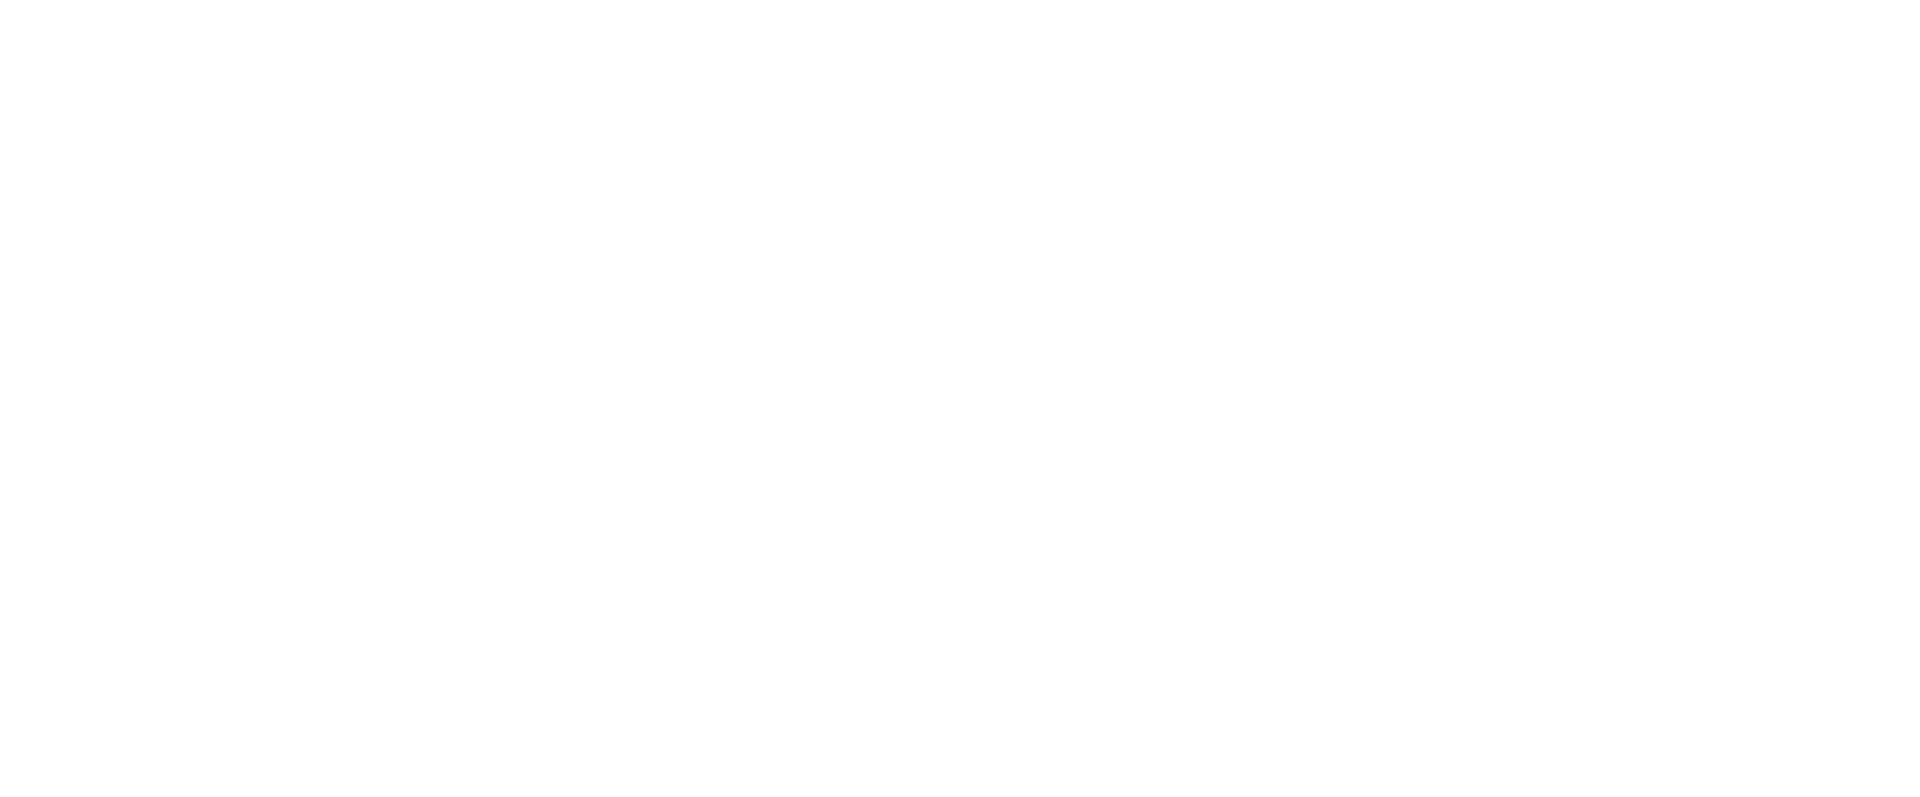 International Year One - University of Greenwich International College logo